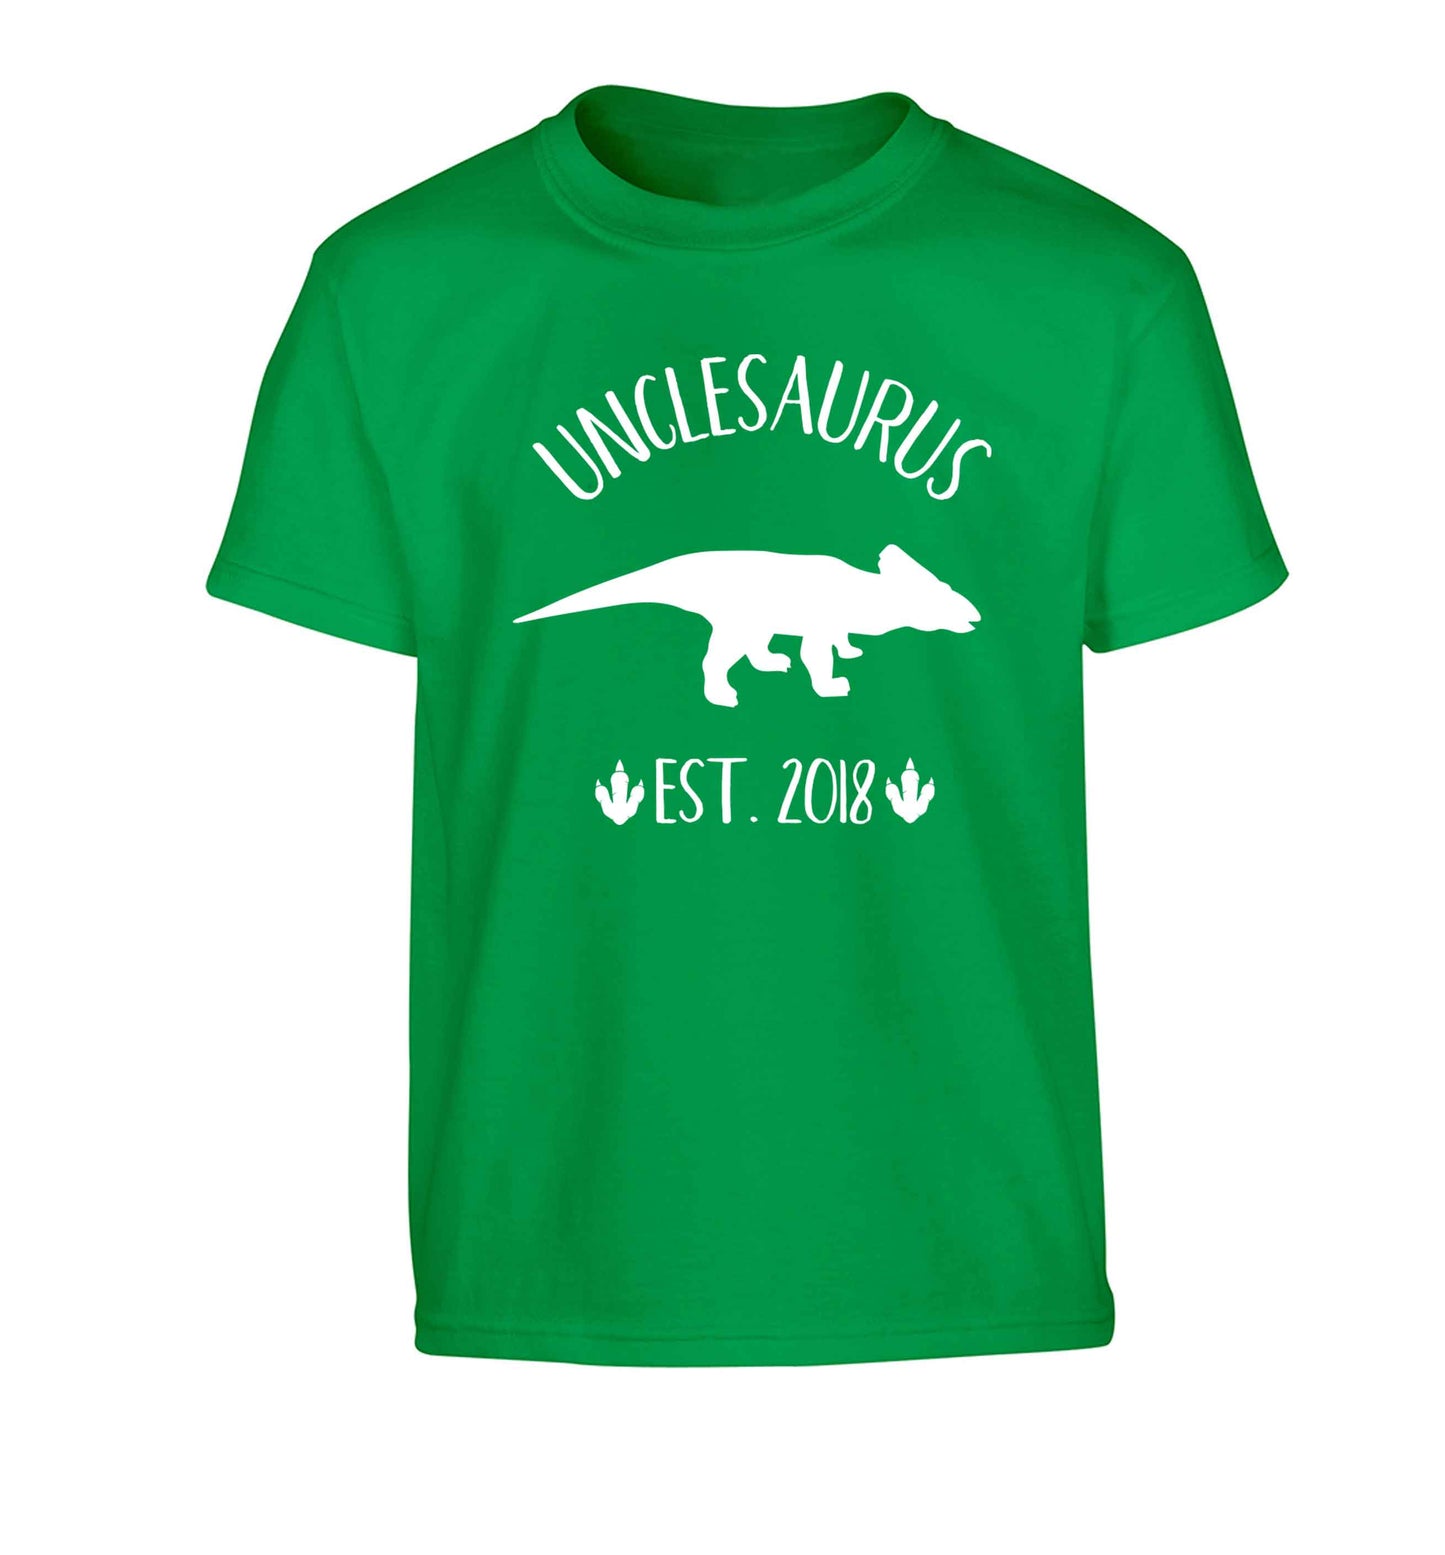 Personalised unclesaurus since (custom date) Children's green Tshirt 12-13 Years